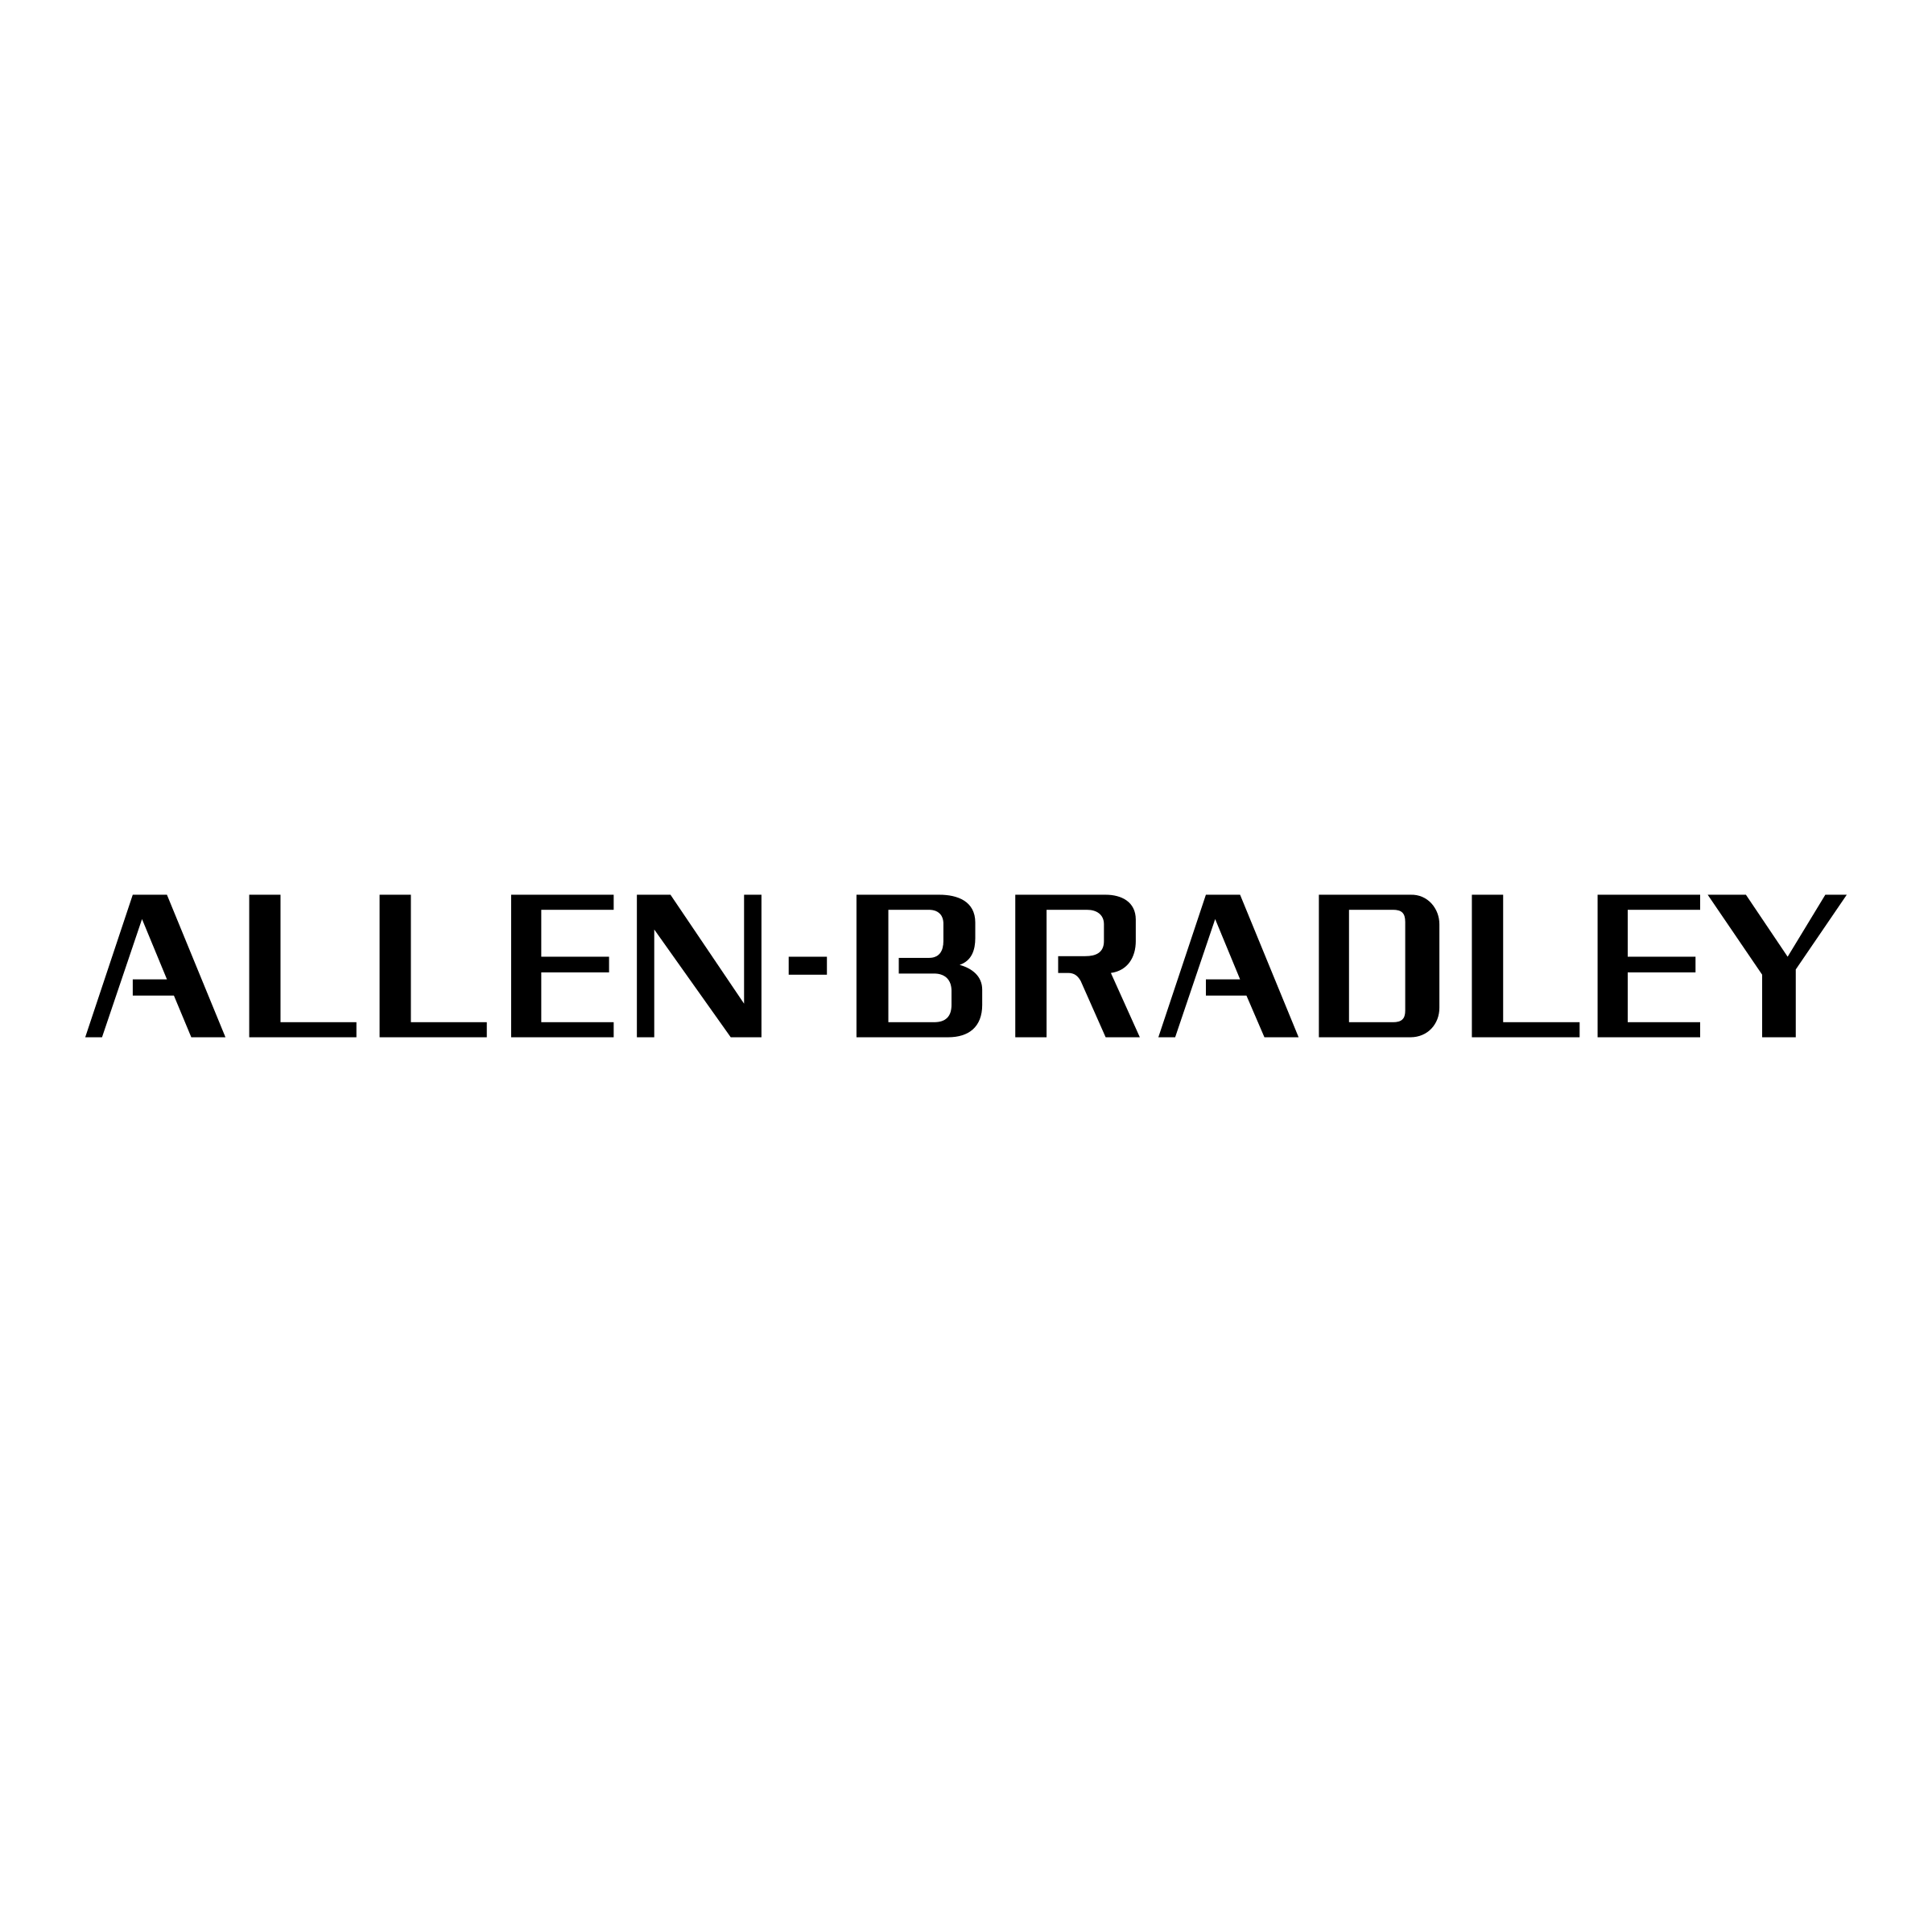 Allen Logo - Allen Bradley 01 Logo PNG Transparent & SVG Vector - Freebie Supply